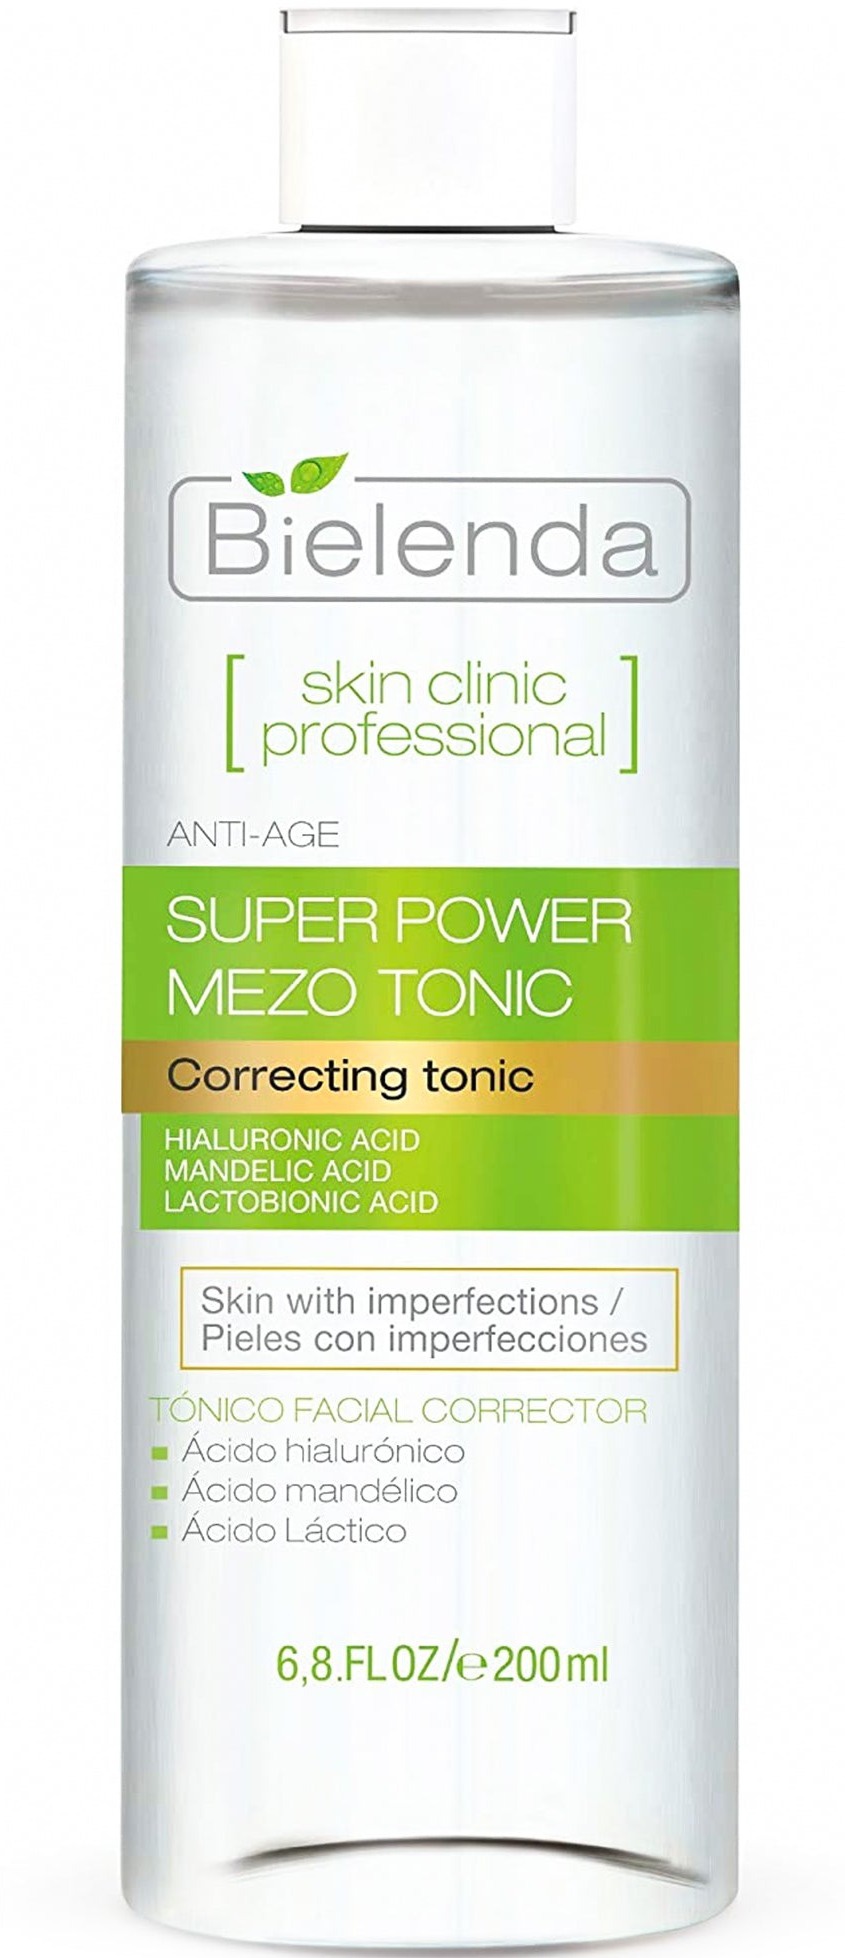 Bielenda Skin Clinic Professional. Super Power Mezo Tonic